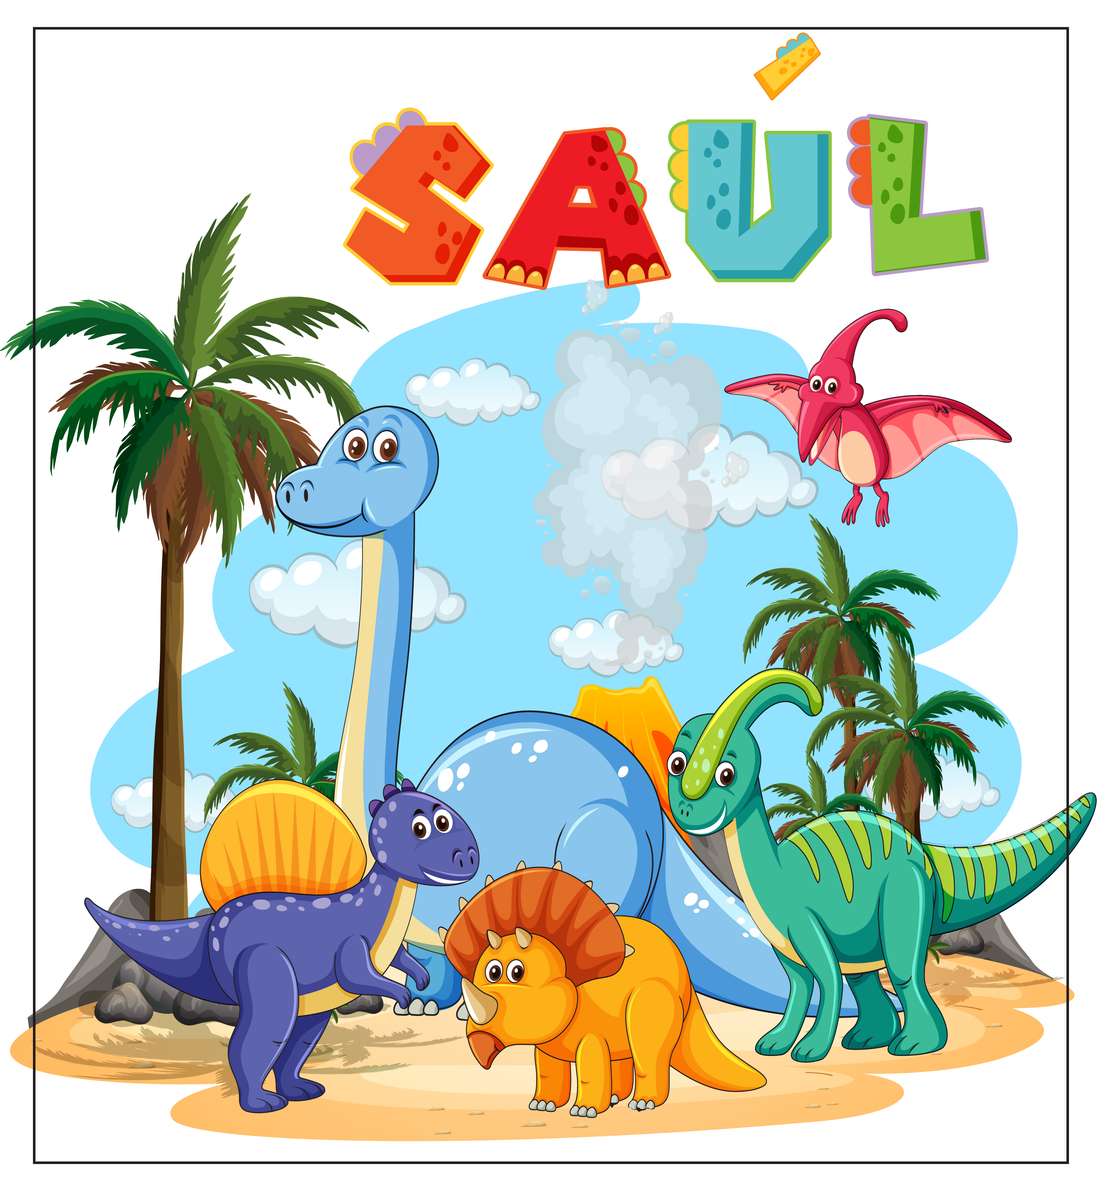 Saul spotyka numer 1 puzzle online